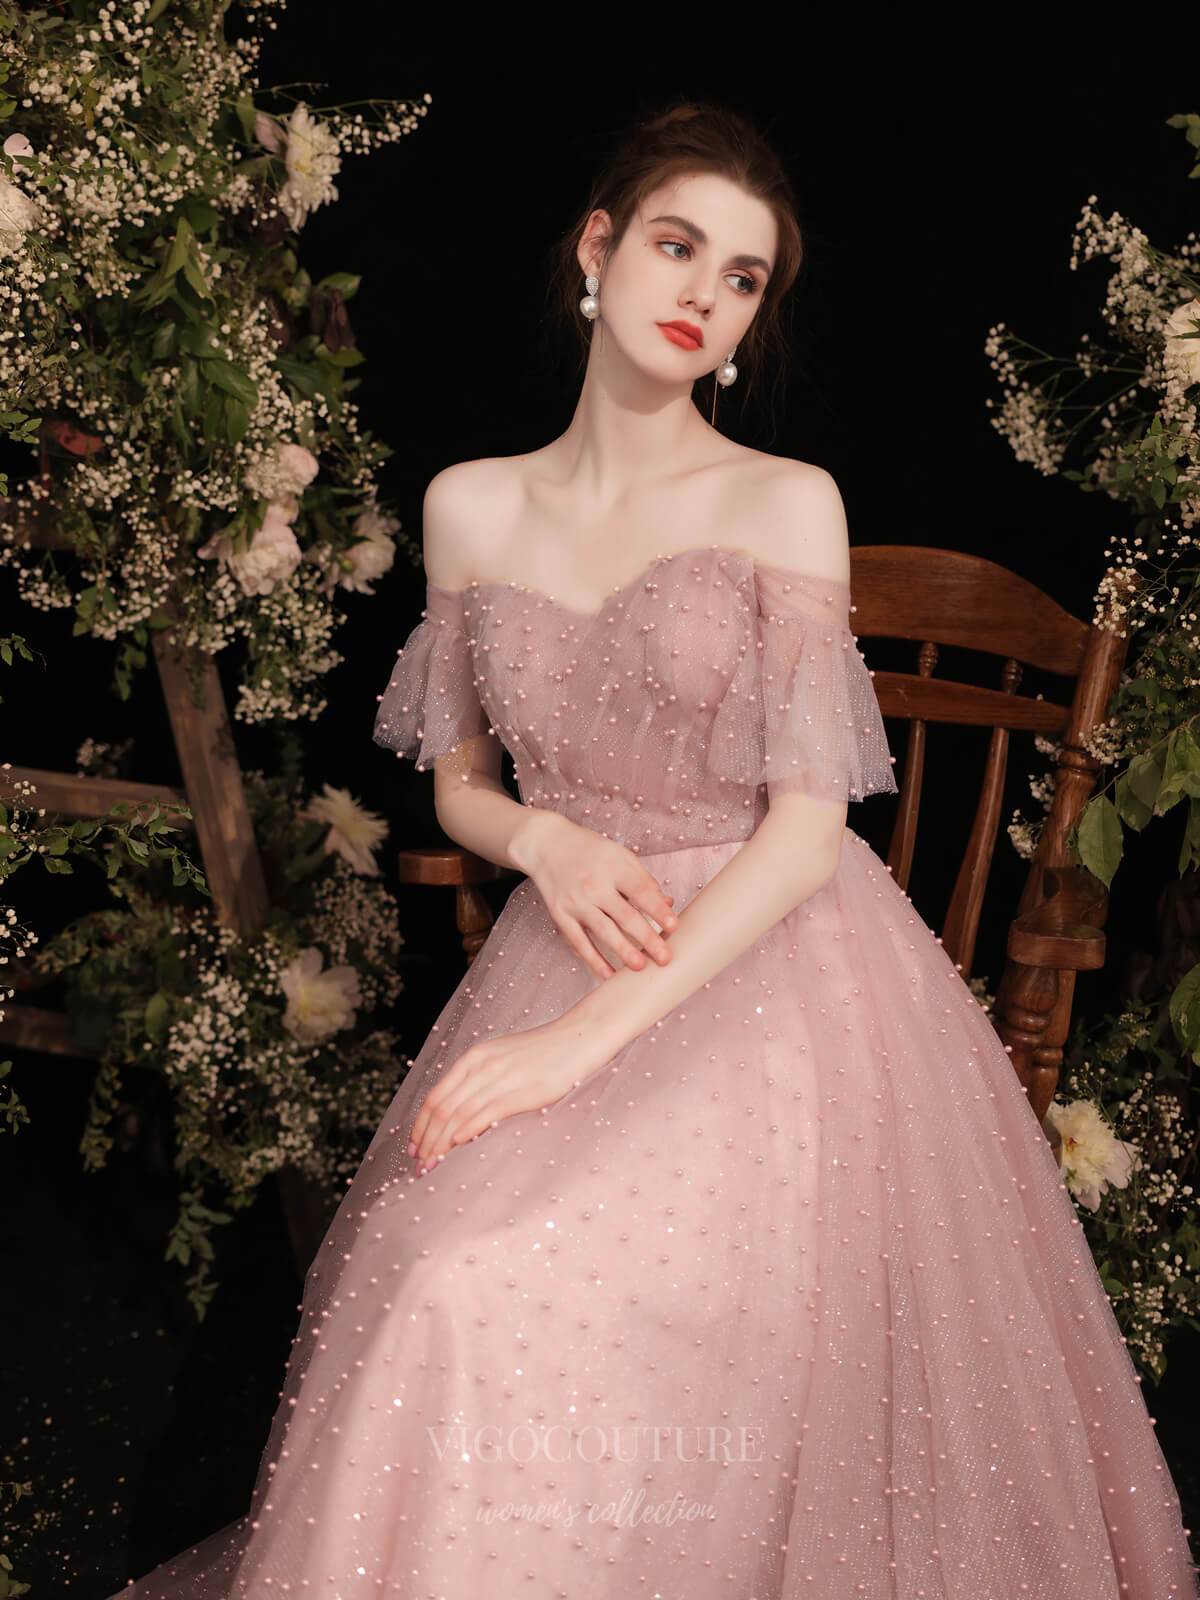 vigocouture-Blush Off the Shoulder Beaded Prom Dress 20727-Prom Dresses-vigocouture-